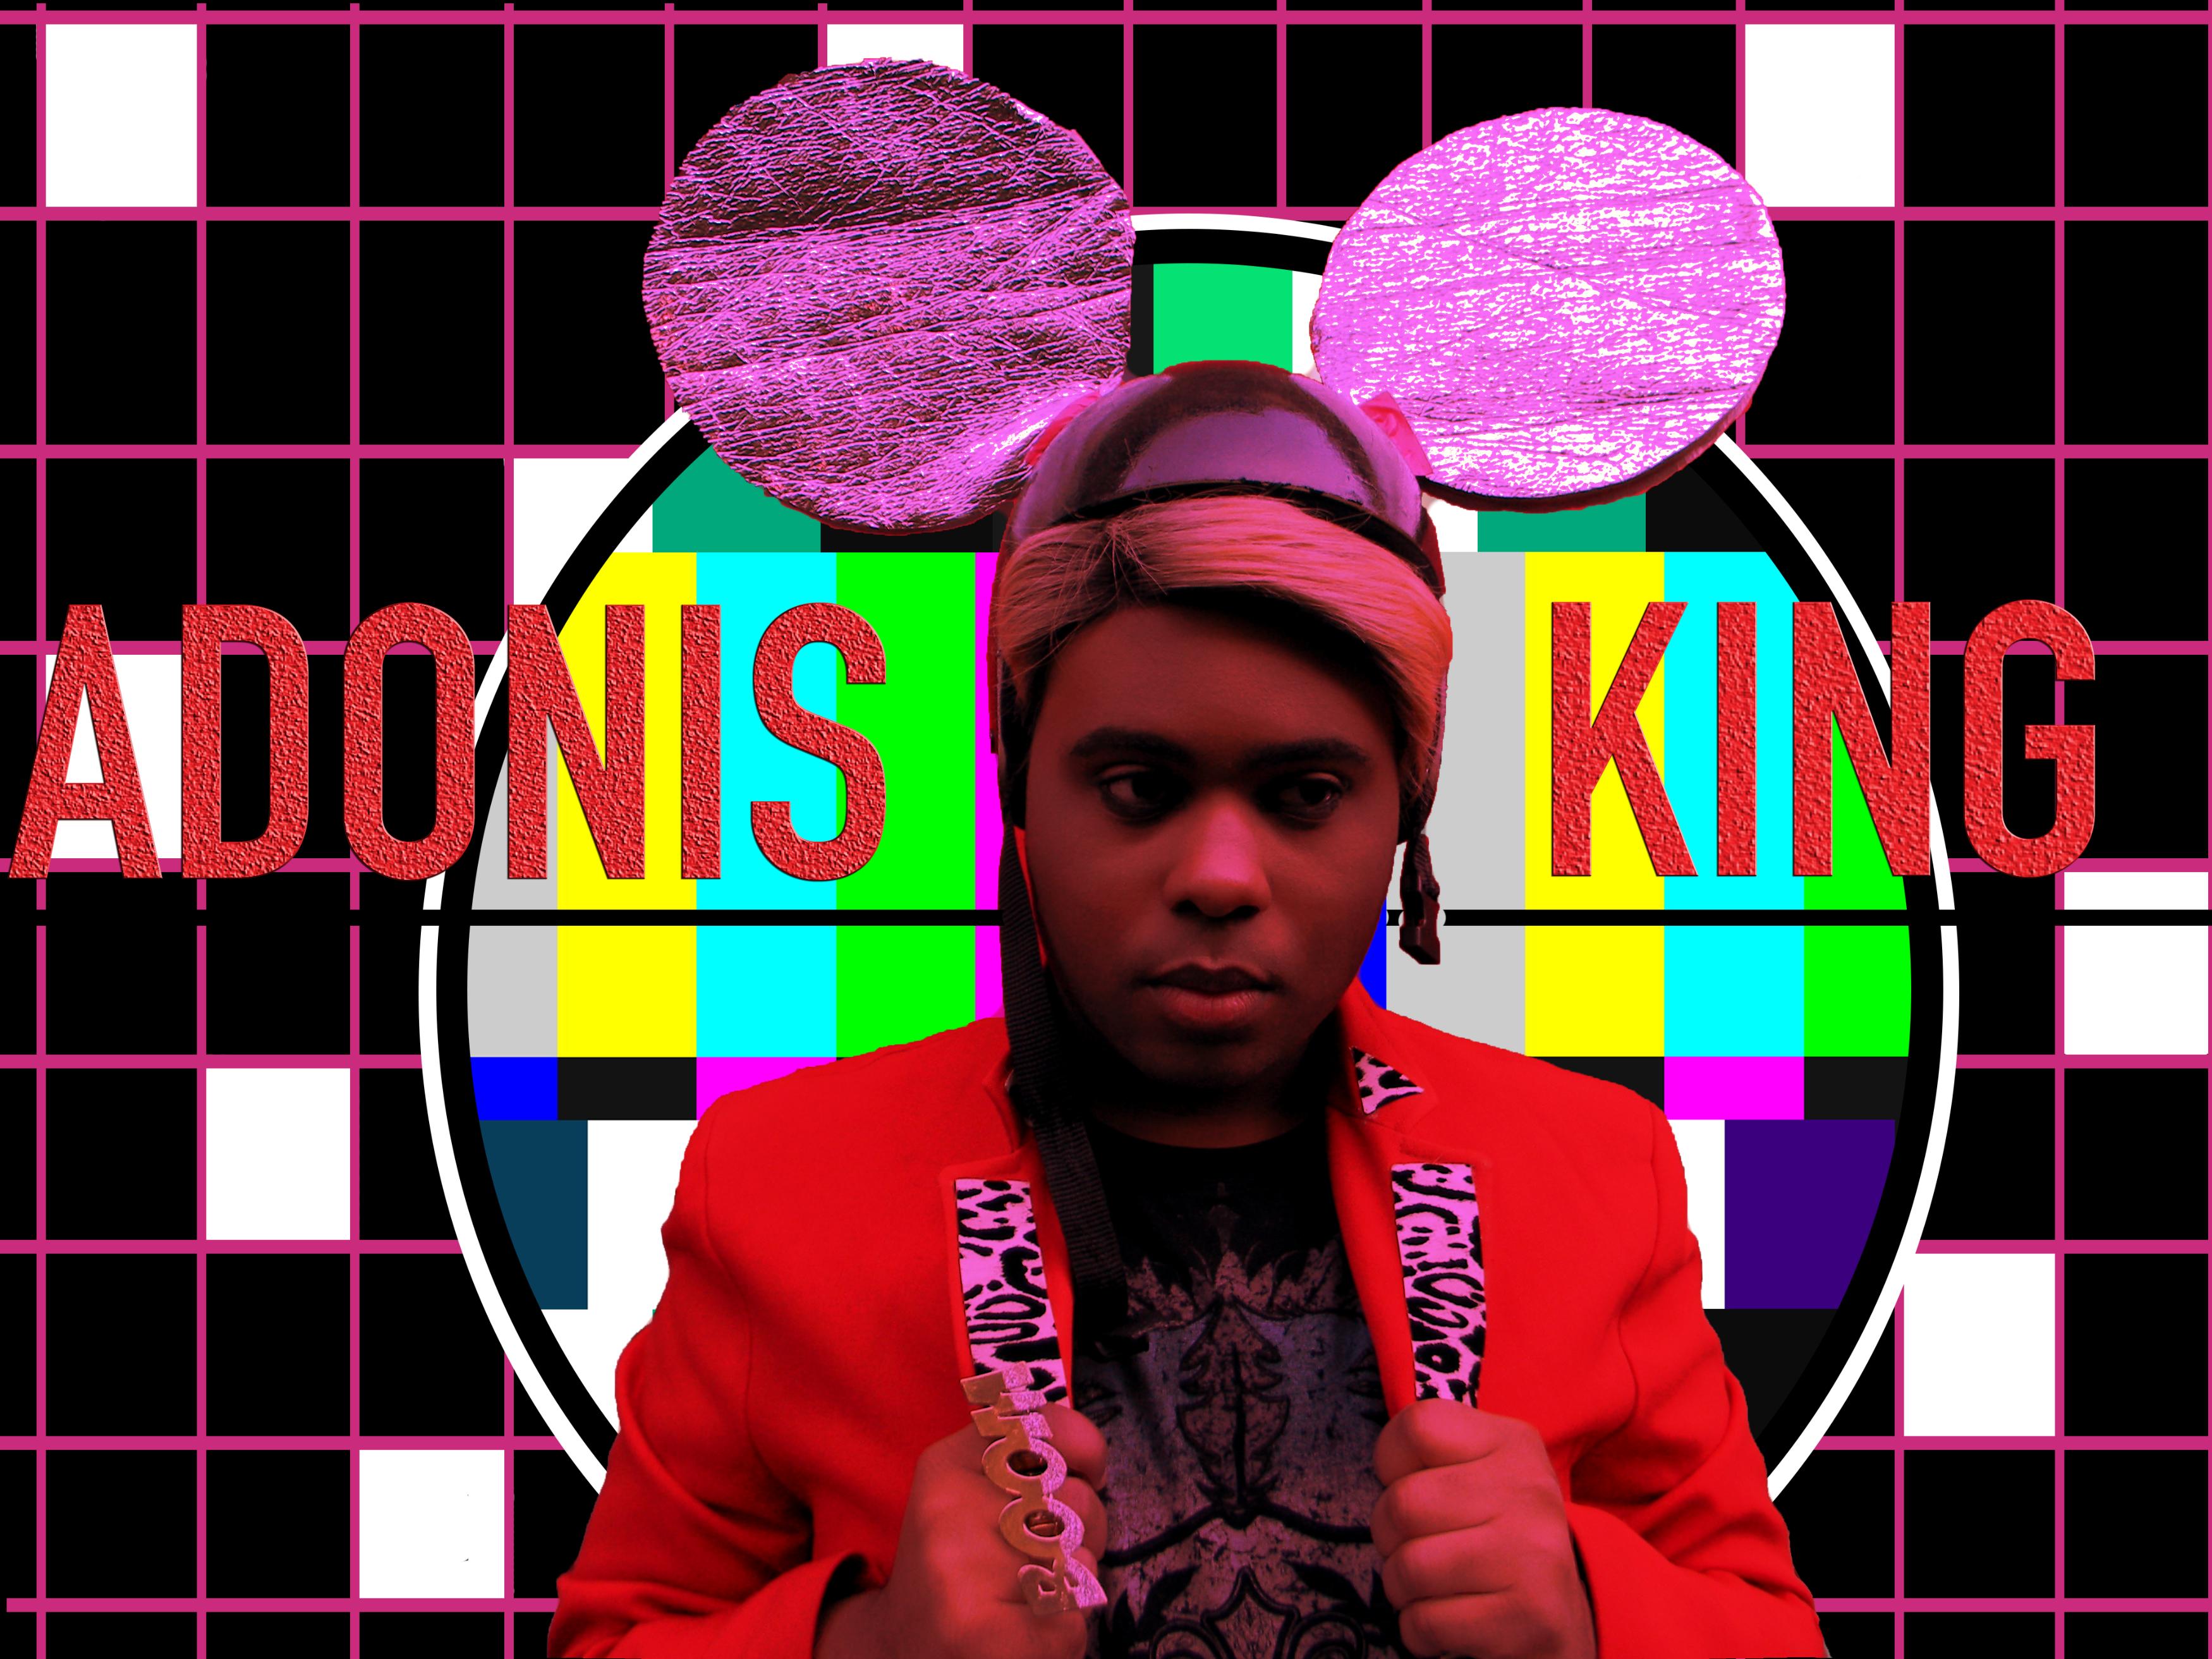 Adonis King Retro www